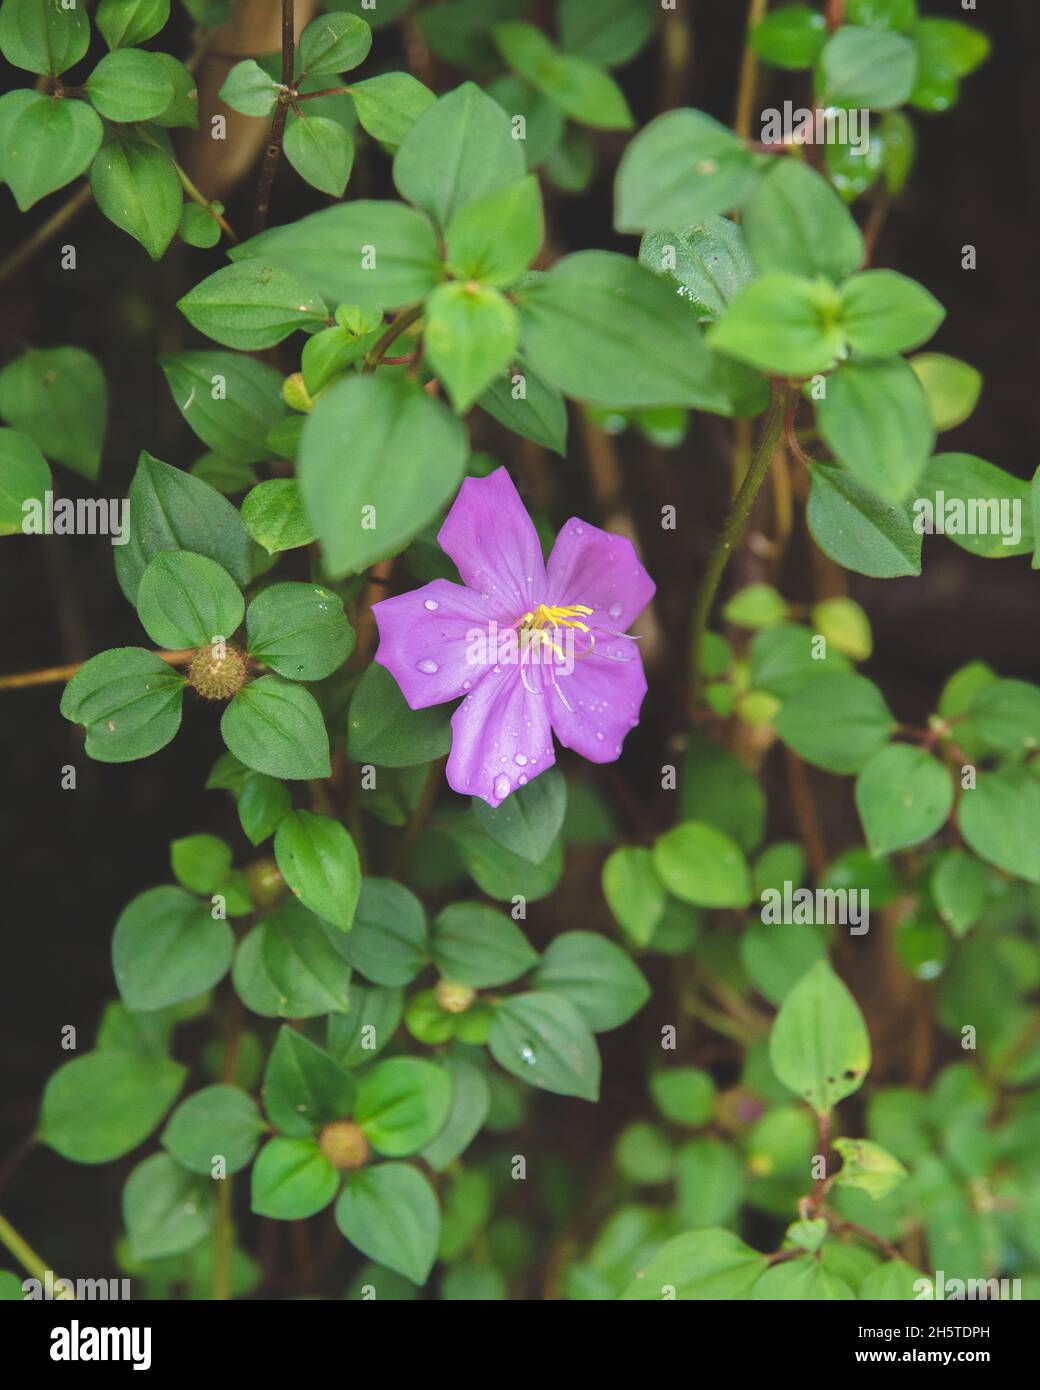 Closeup shot of a beautiful purple tibouchina flower with green leaves Stock Photo